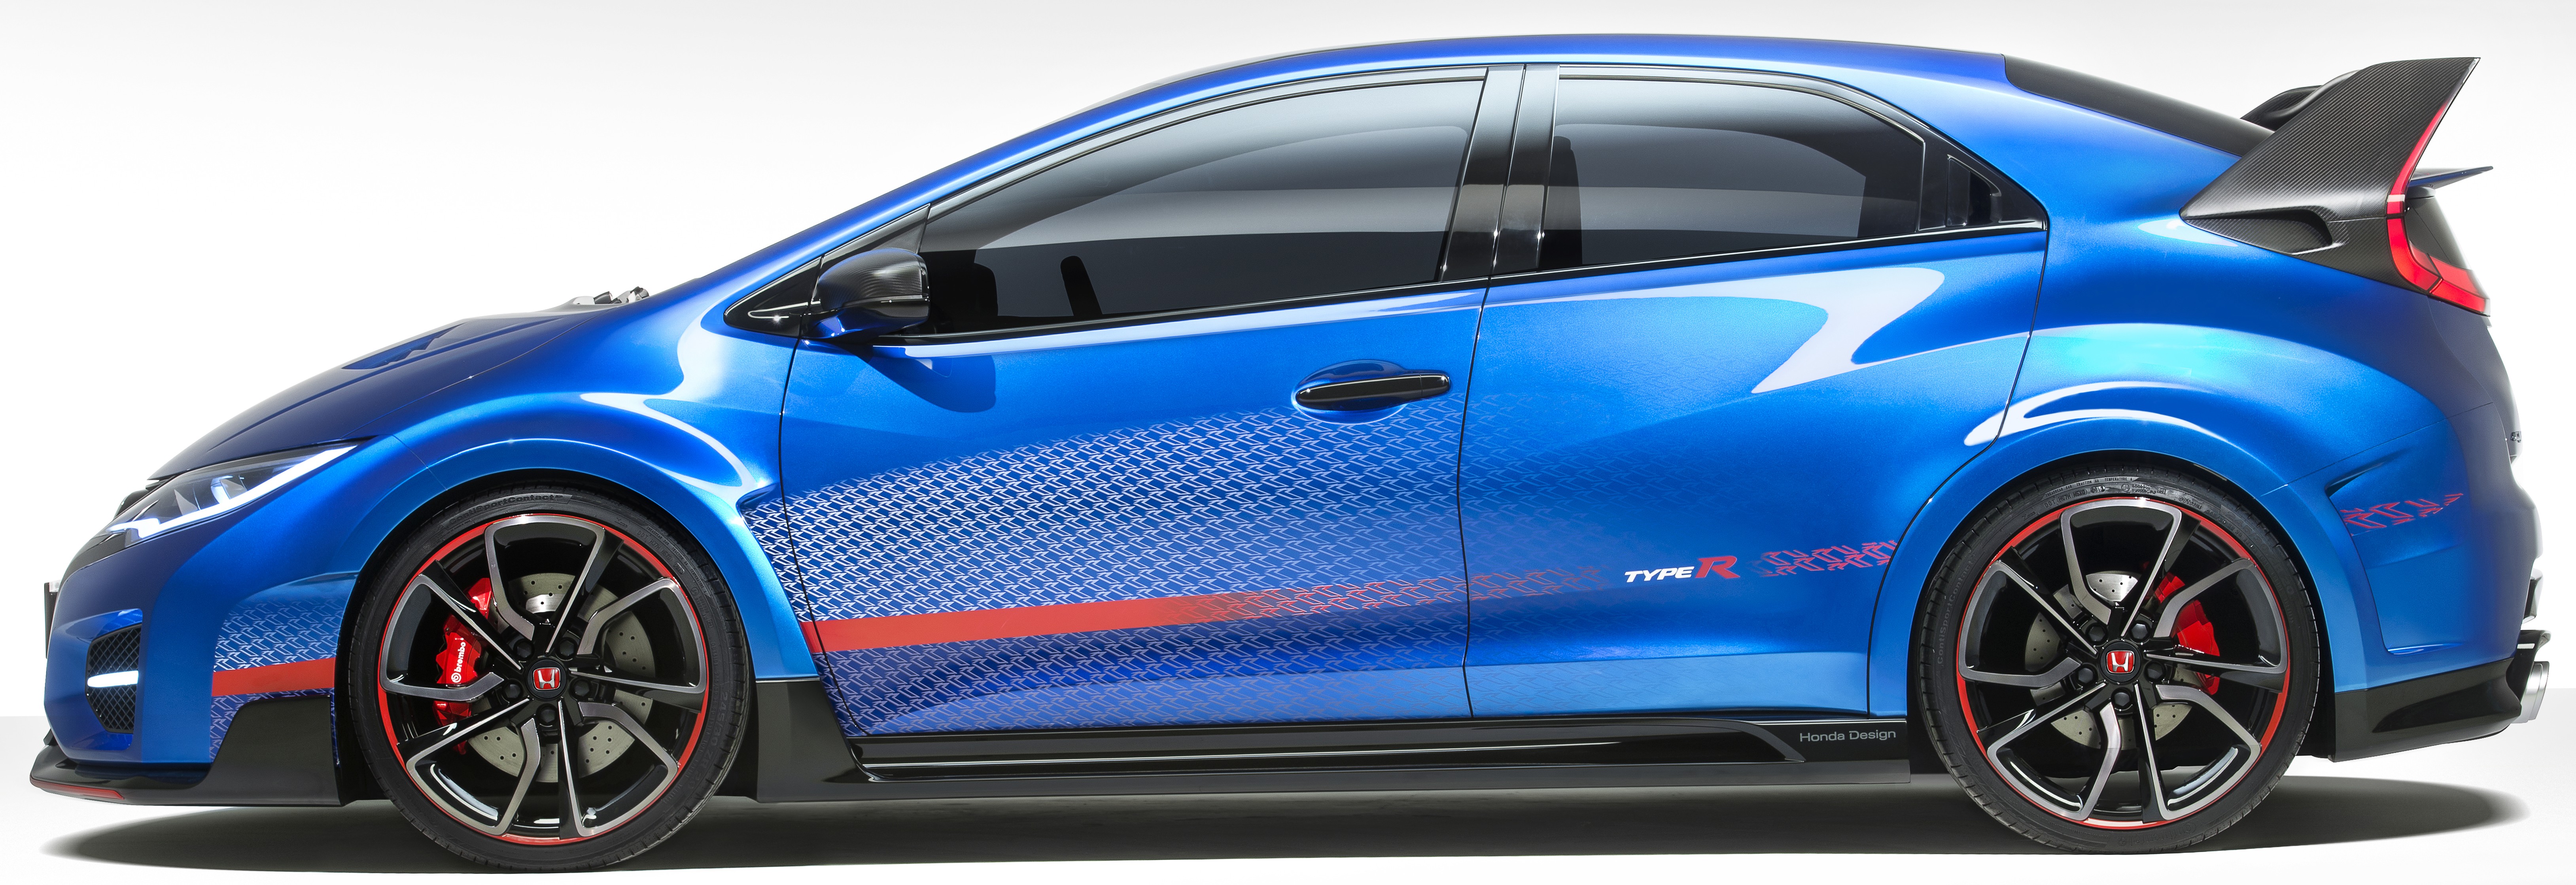 Honda Civic Type R Concept II to be shown in Paris Honda Civic Type-R ...